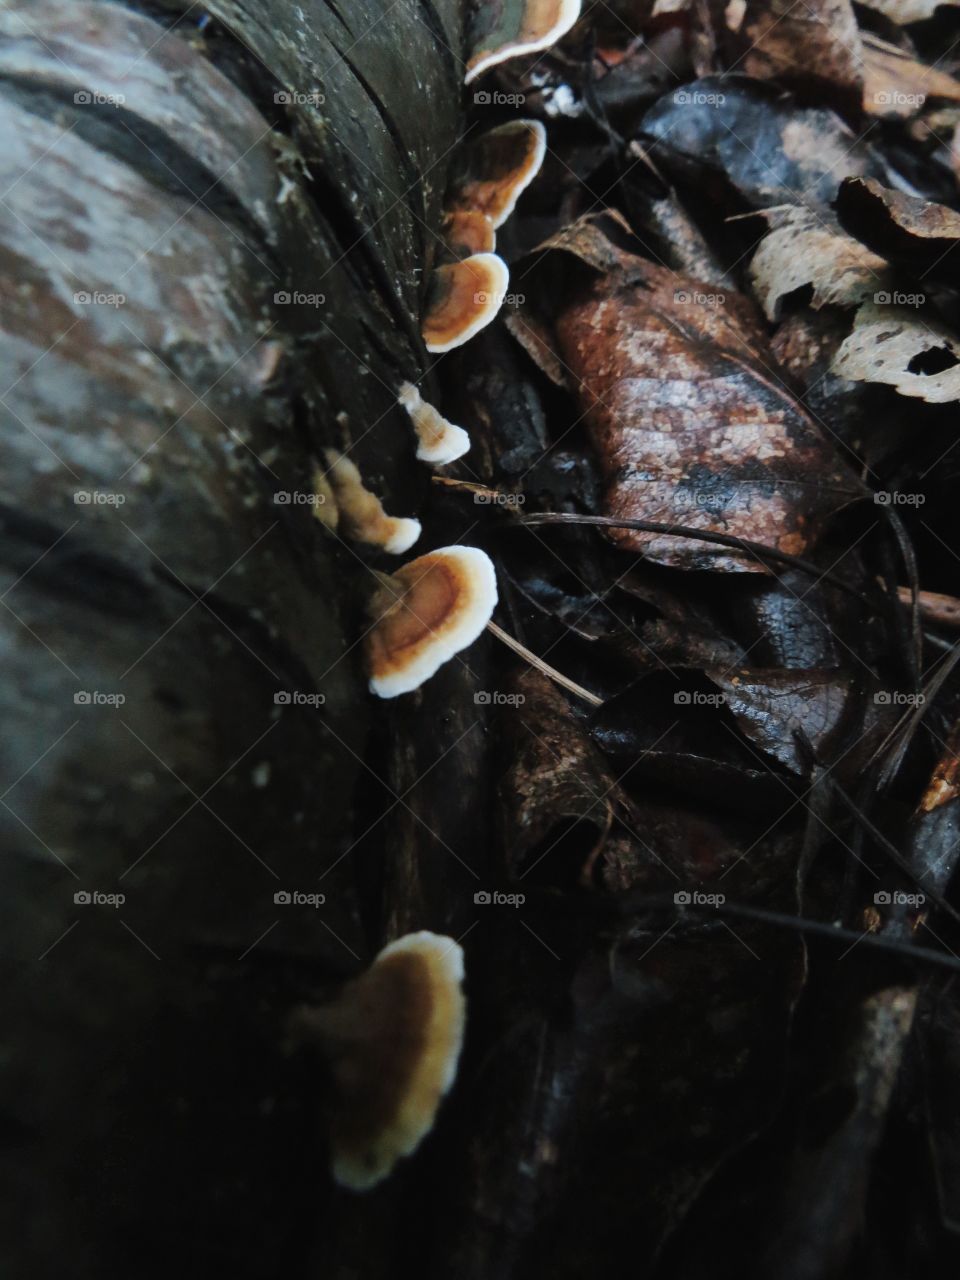 Mushrooms on a fallen branch